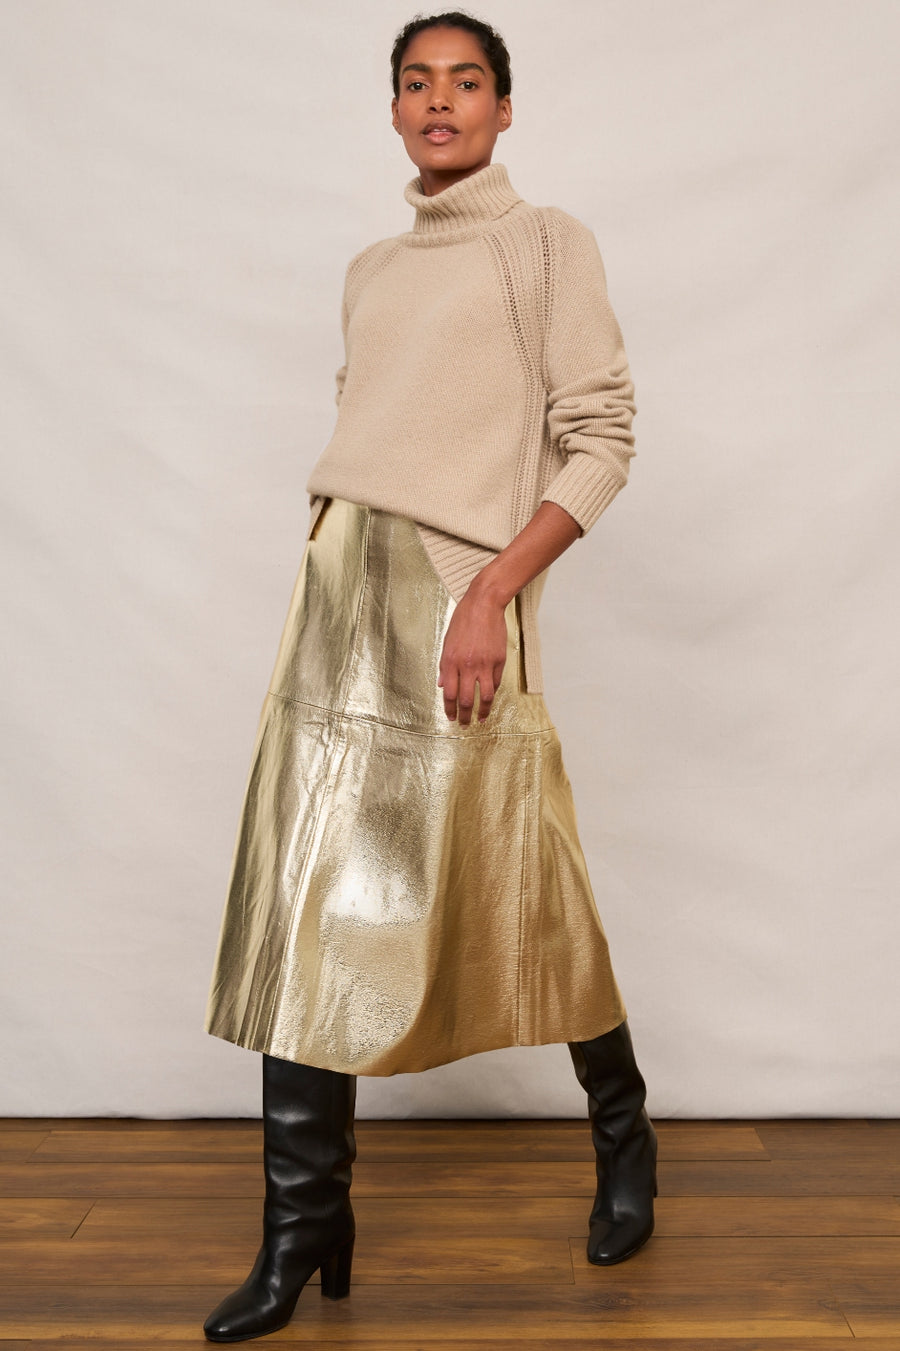 Lateisha Faux Leather Skirt - Metallic Gold